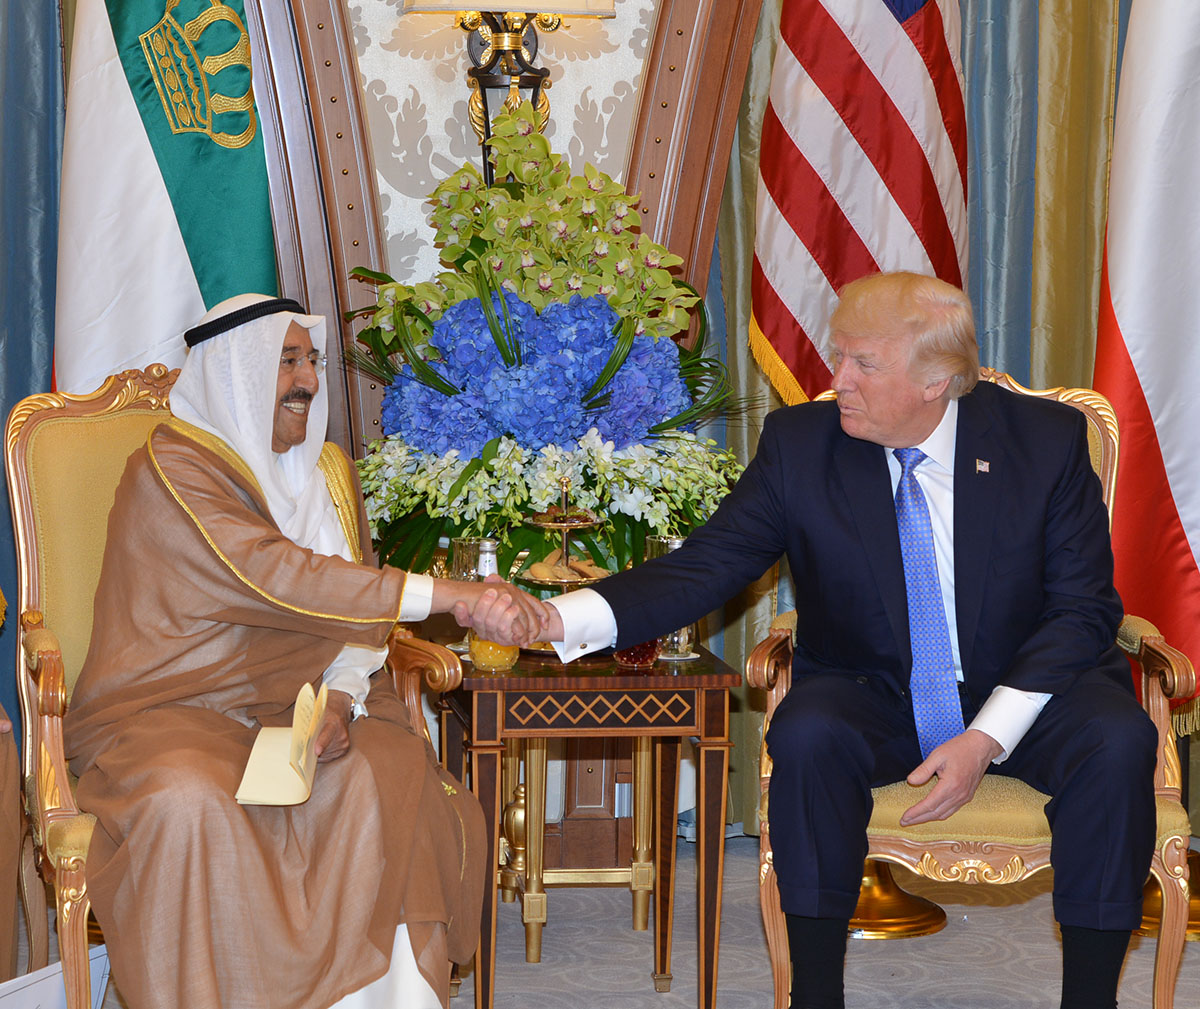 His Highness the Amir Sheikh Sabah Al-Ahmad Al-Jaber Al-Sabah visited US President Donald Trump